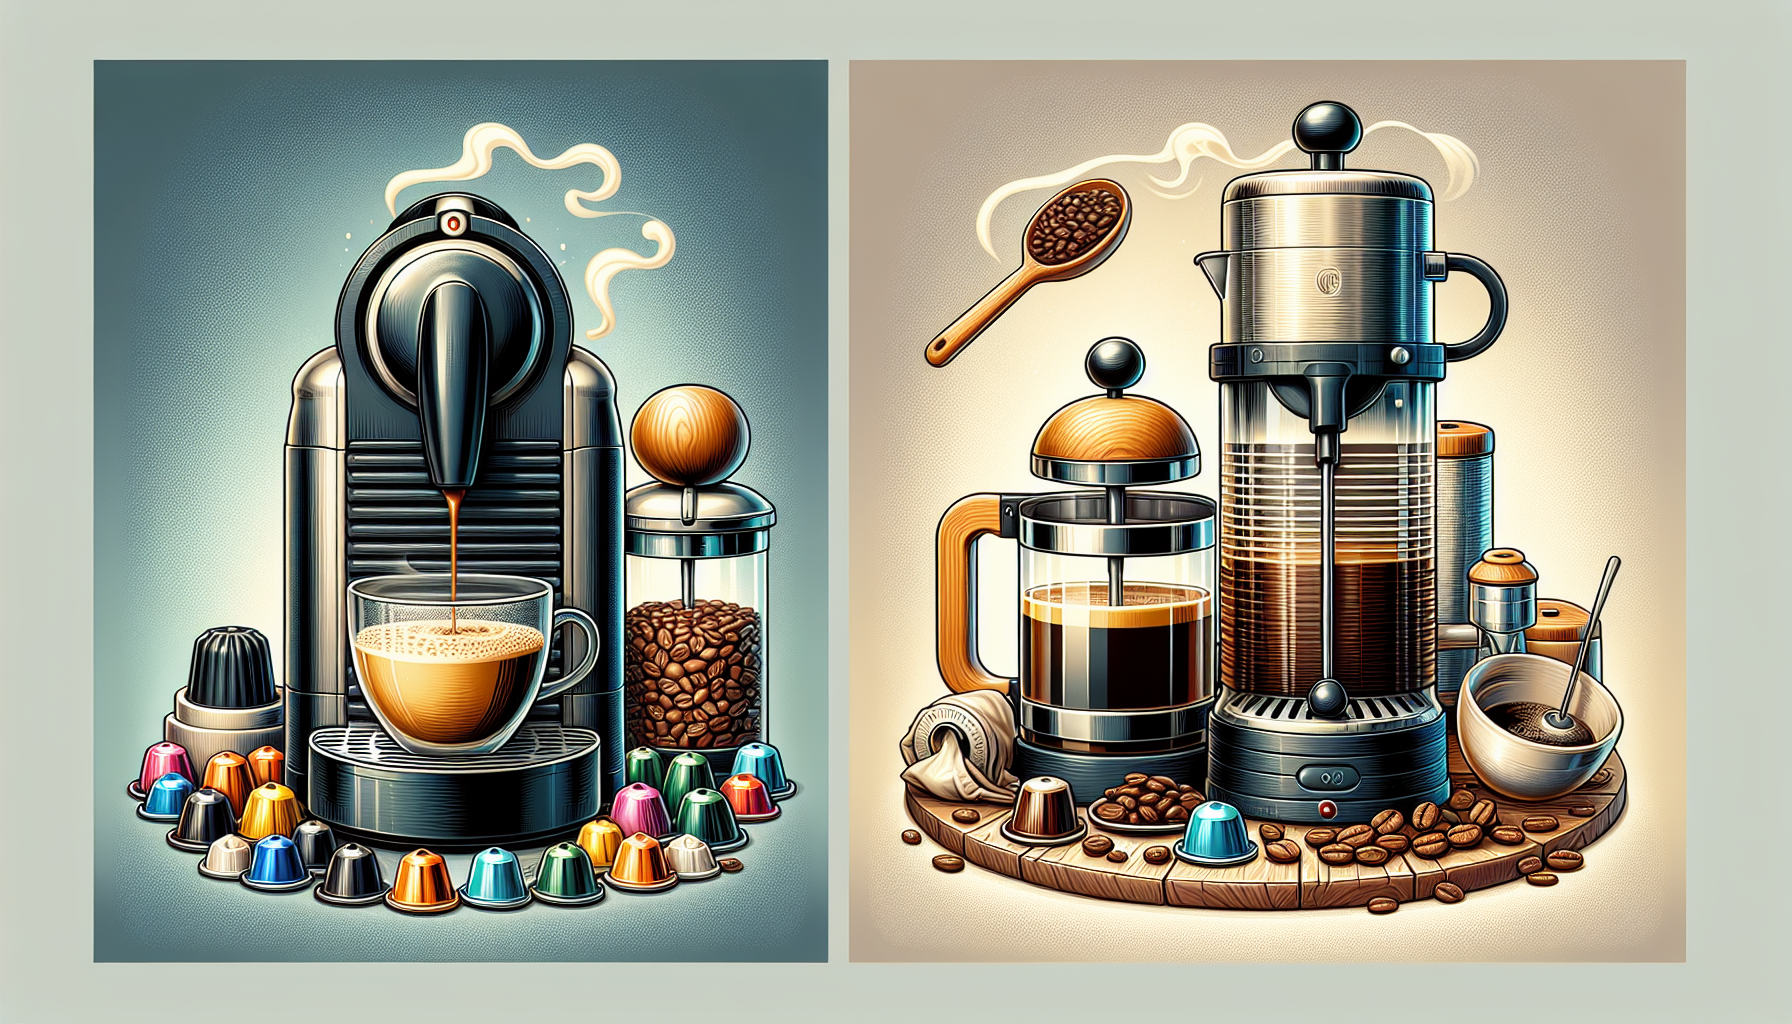 Does Nespresso Make Regular Coffee?